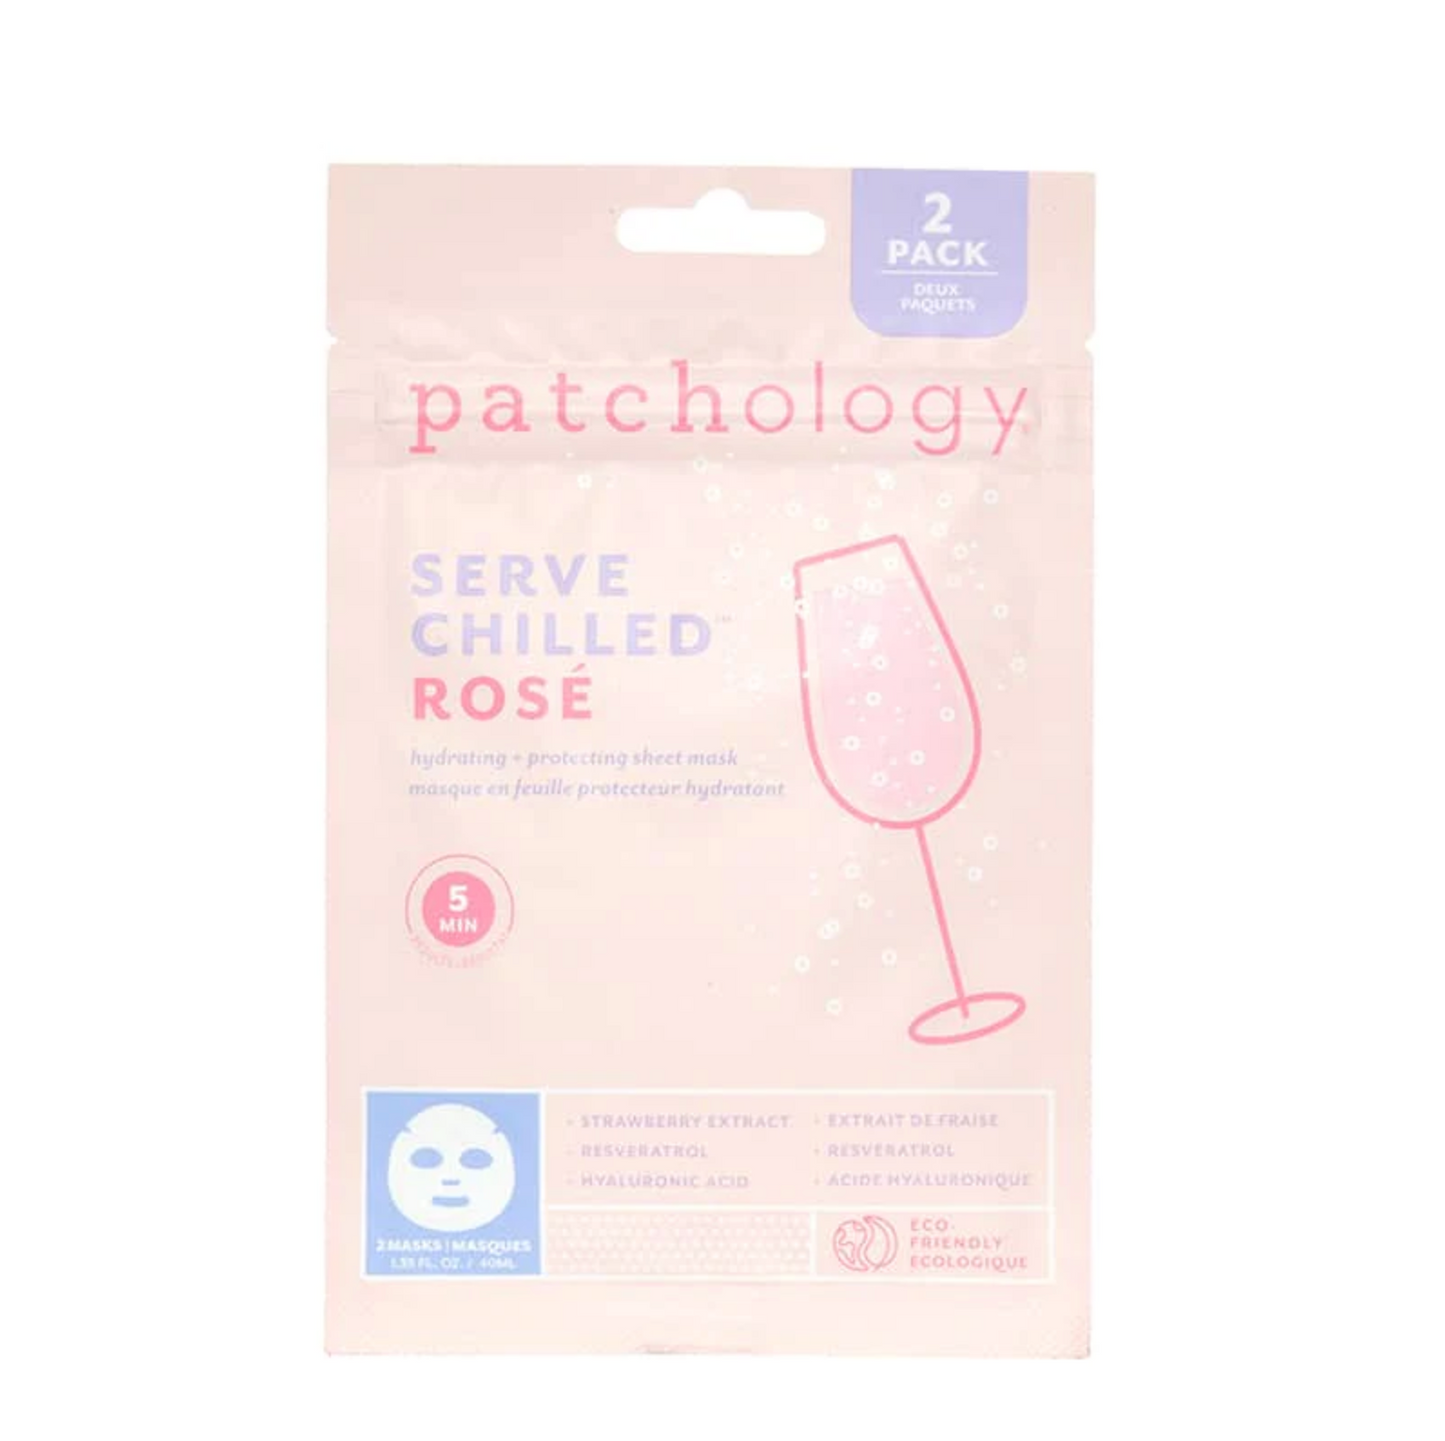 Patchology | Happy Face Sheet Mask Kit (6 Pack)